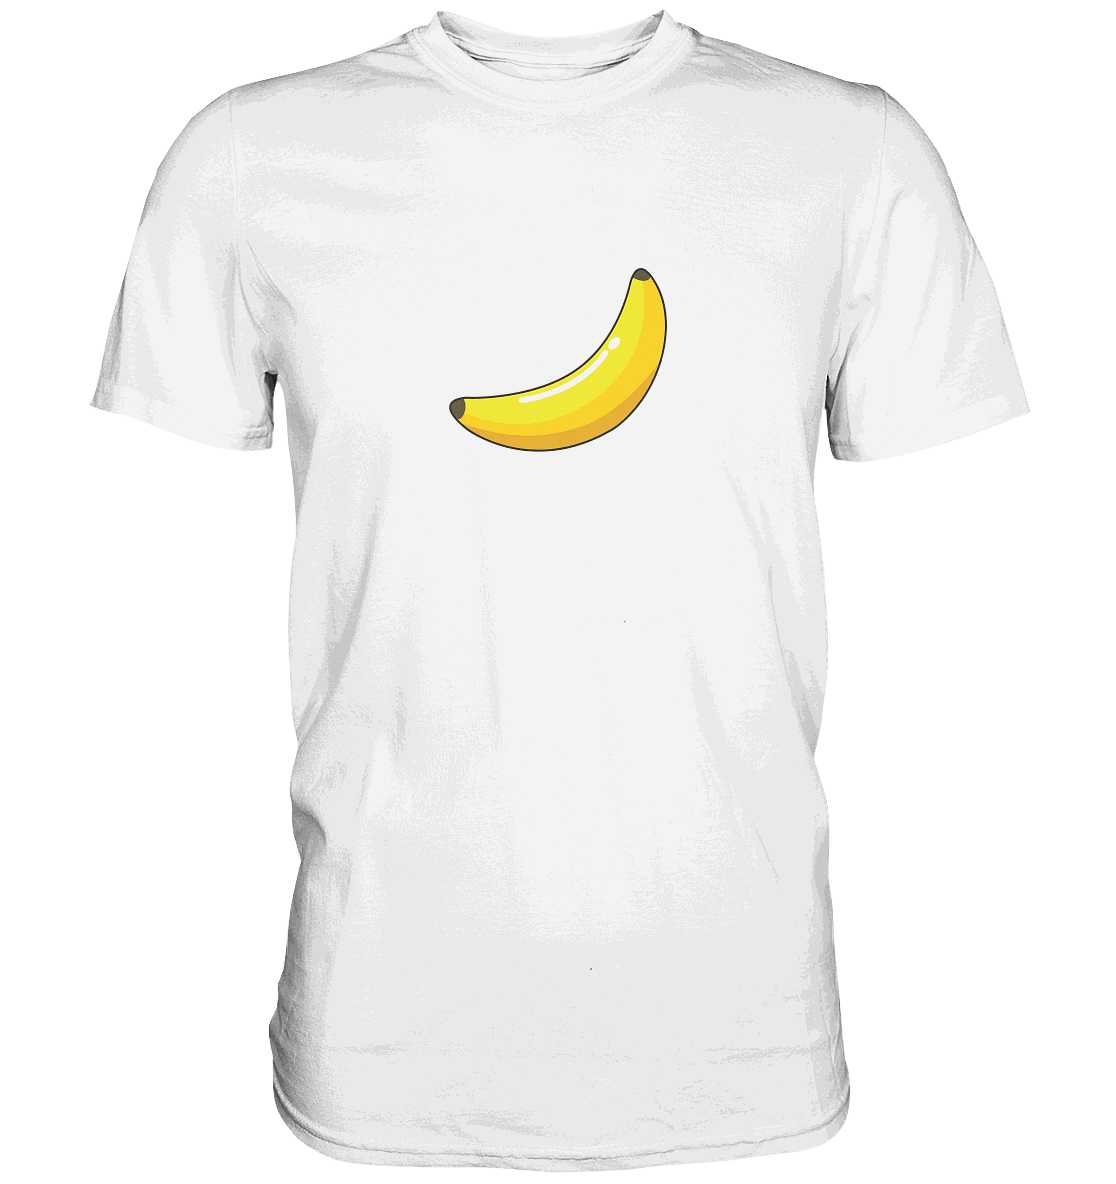 Fruit Shirt - Banana yellow